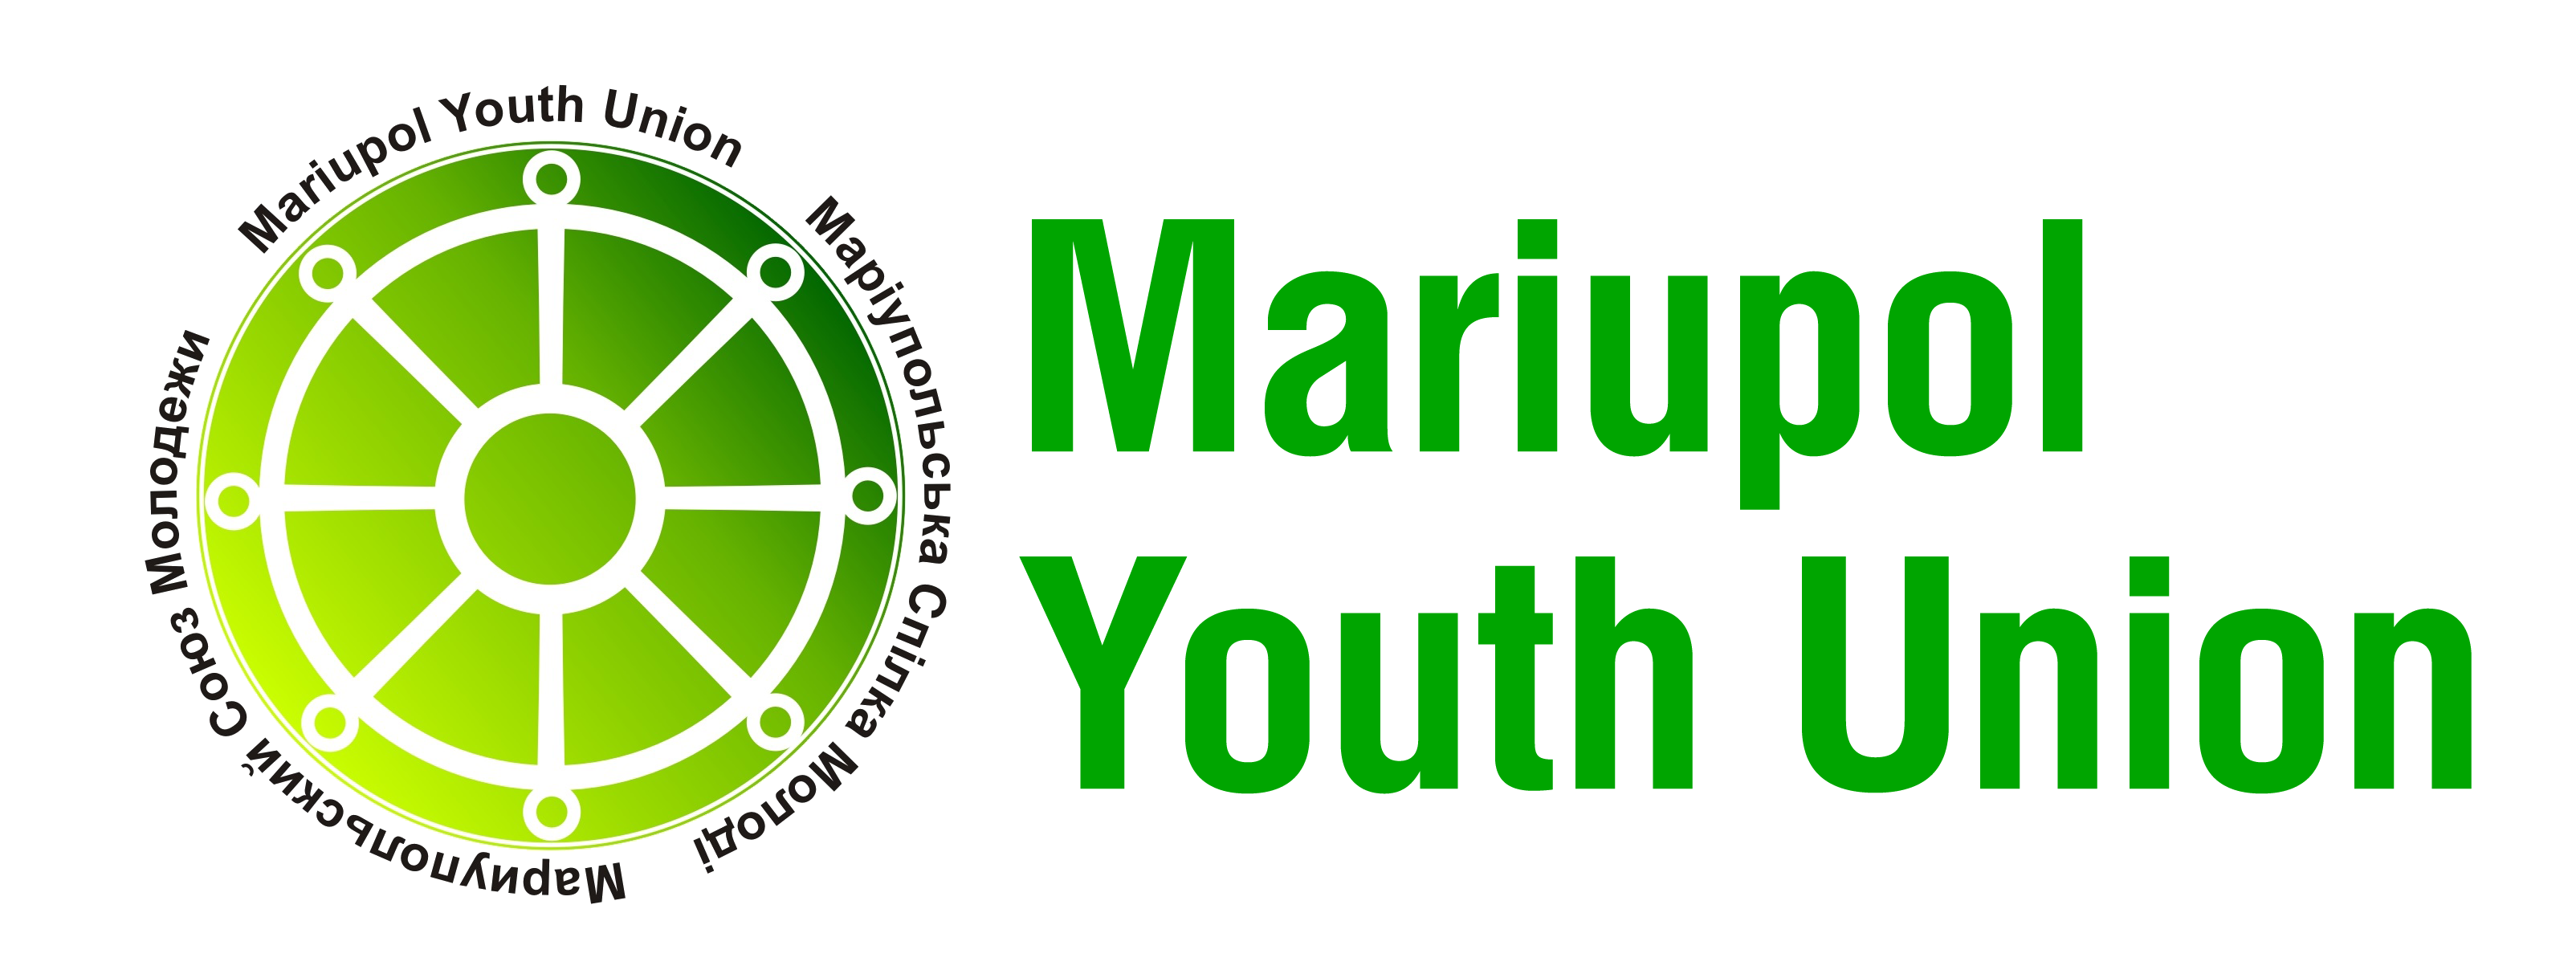 Mariupol Youth Union